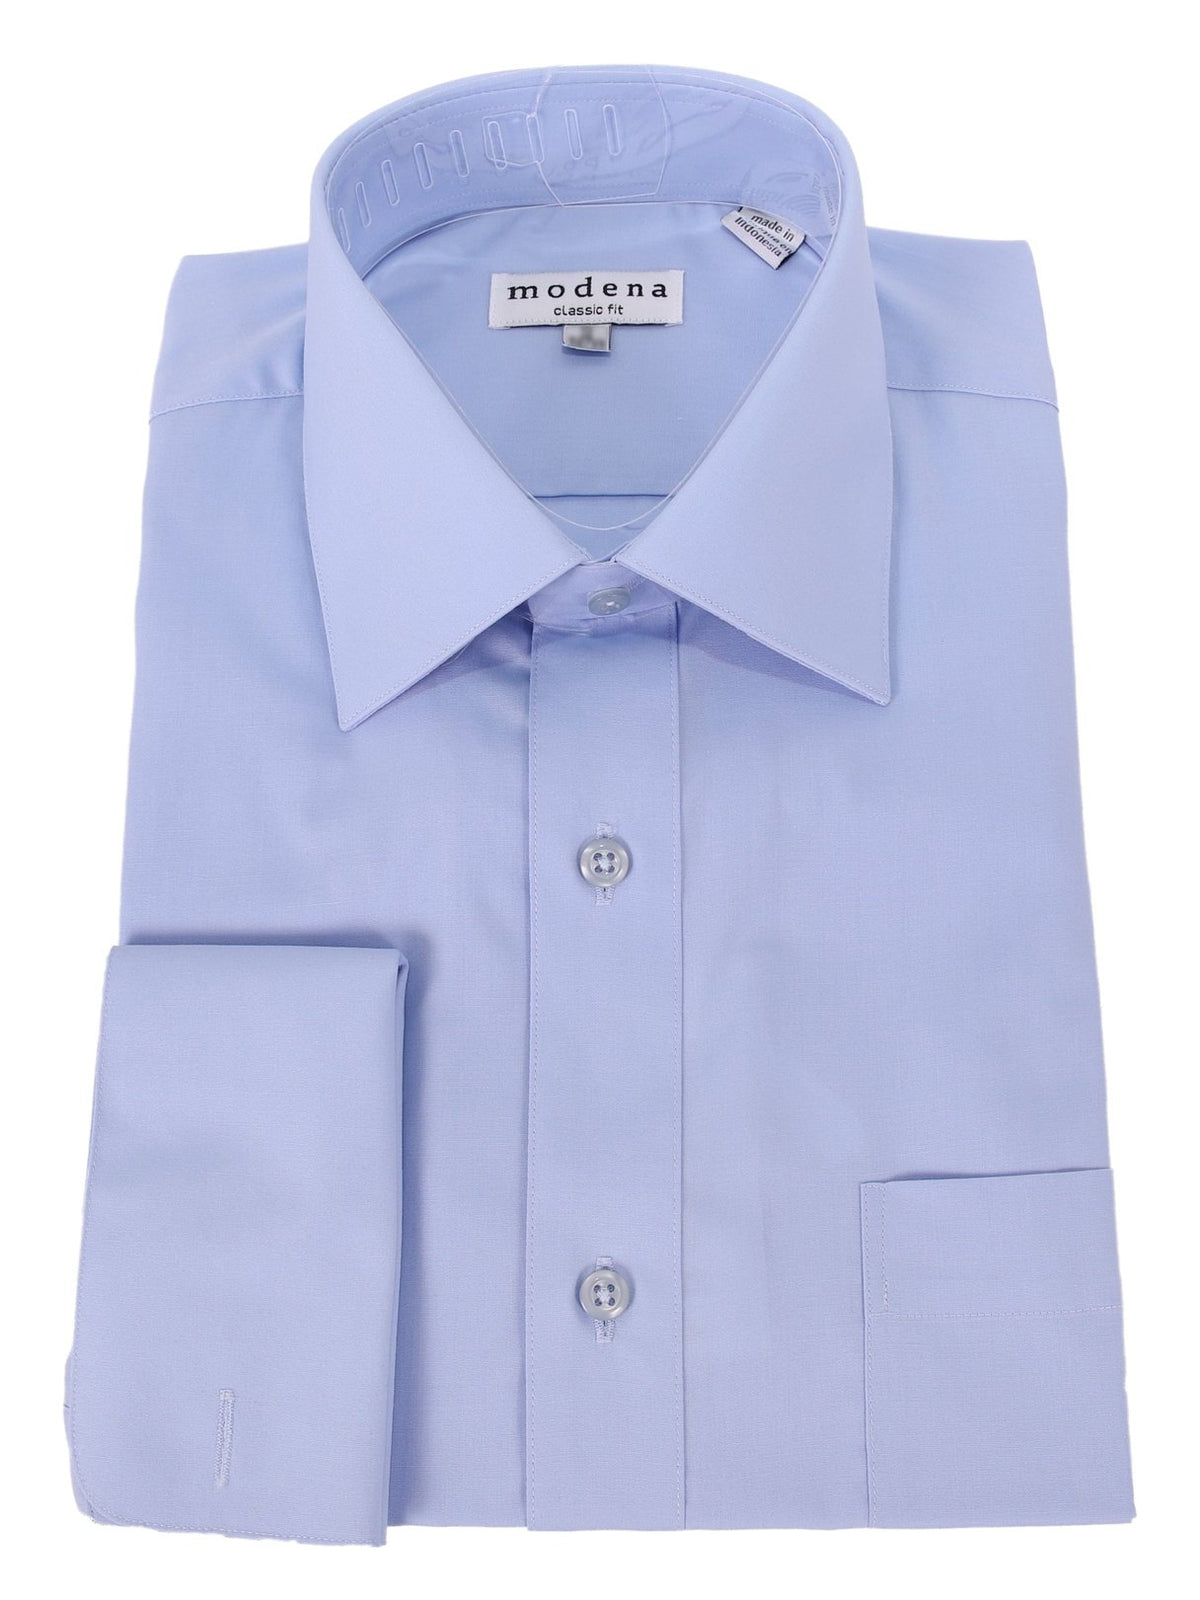 Brand M SHIRTS Mens Solid Powder Blue Regular Fit Spread Collar French Cuff Dress Shirt